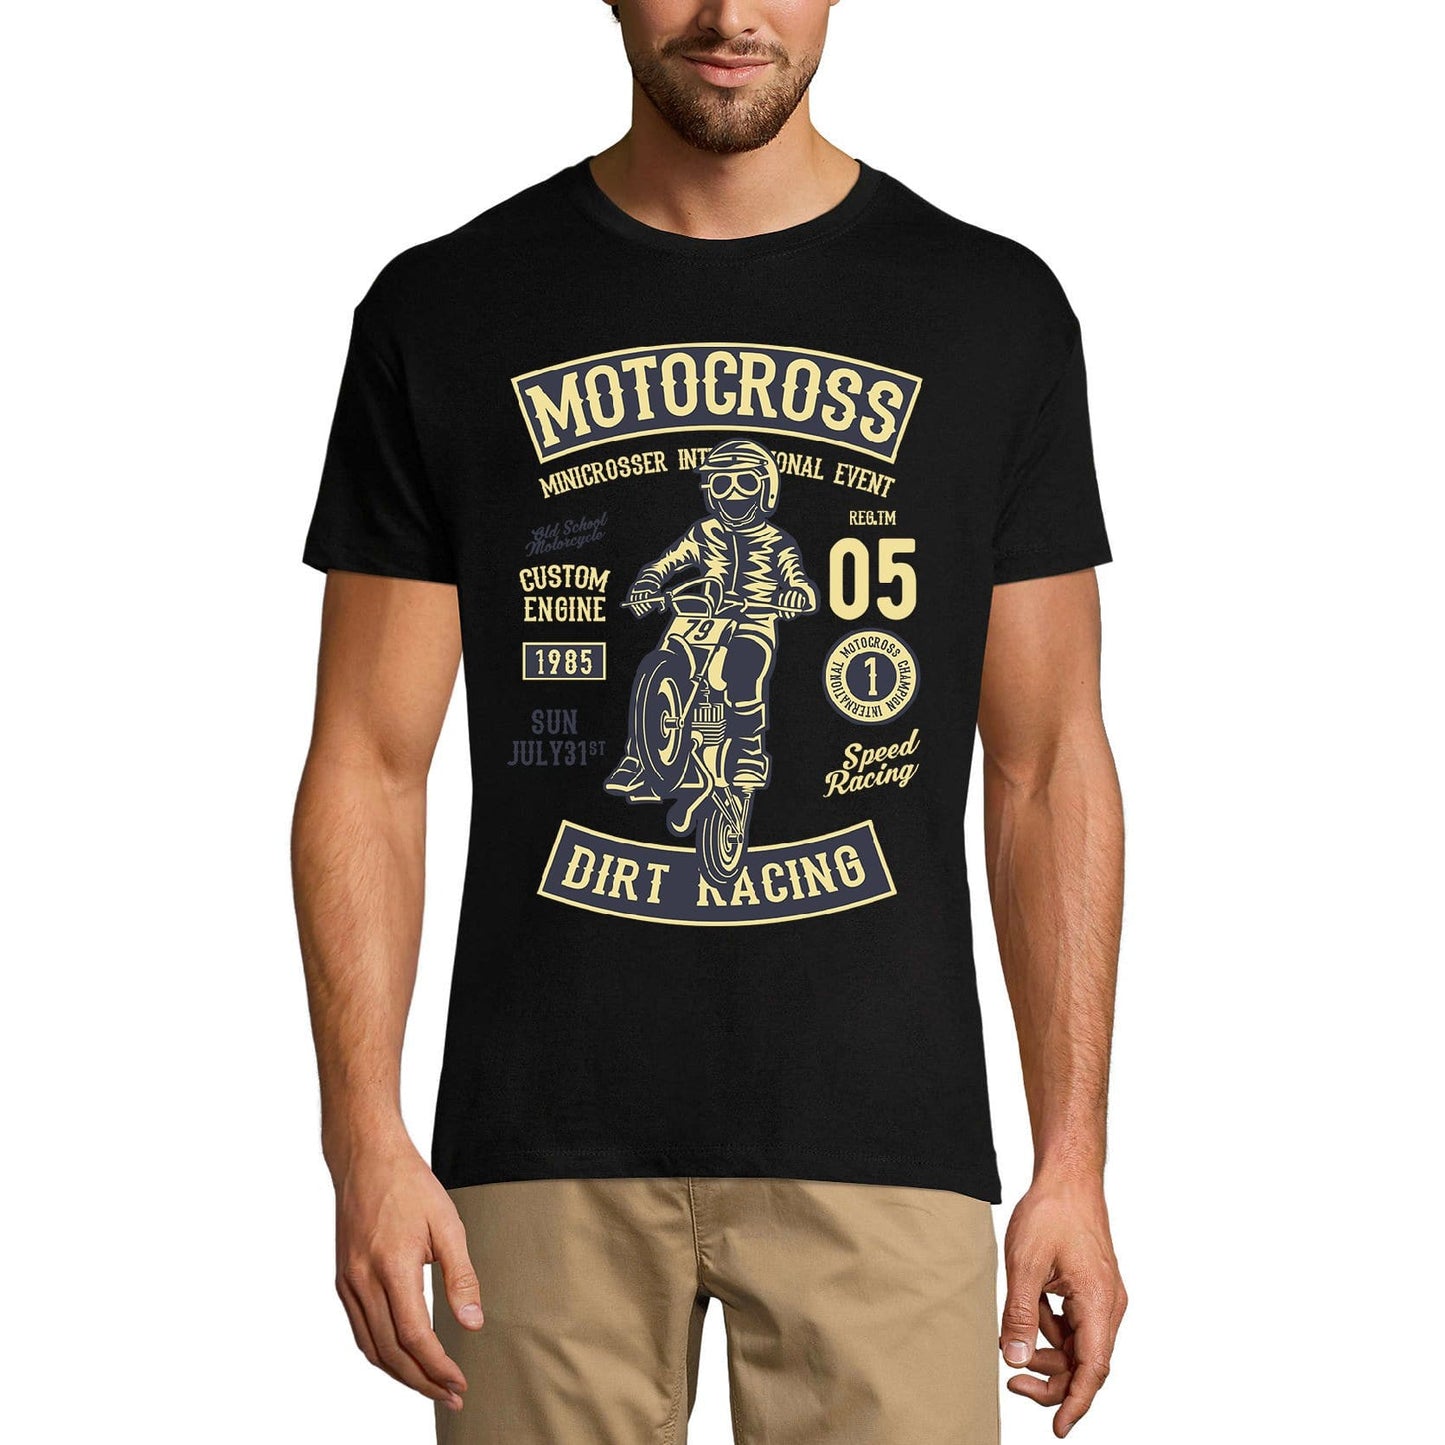 ULTRABASIC Herren T-Shirt Motocross Minicrosser Race – Dirt Racing 1985 T-Shirt